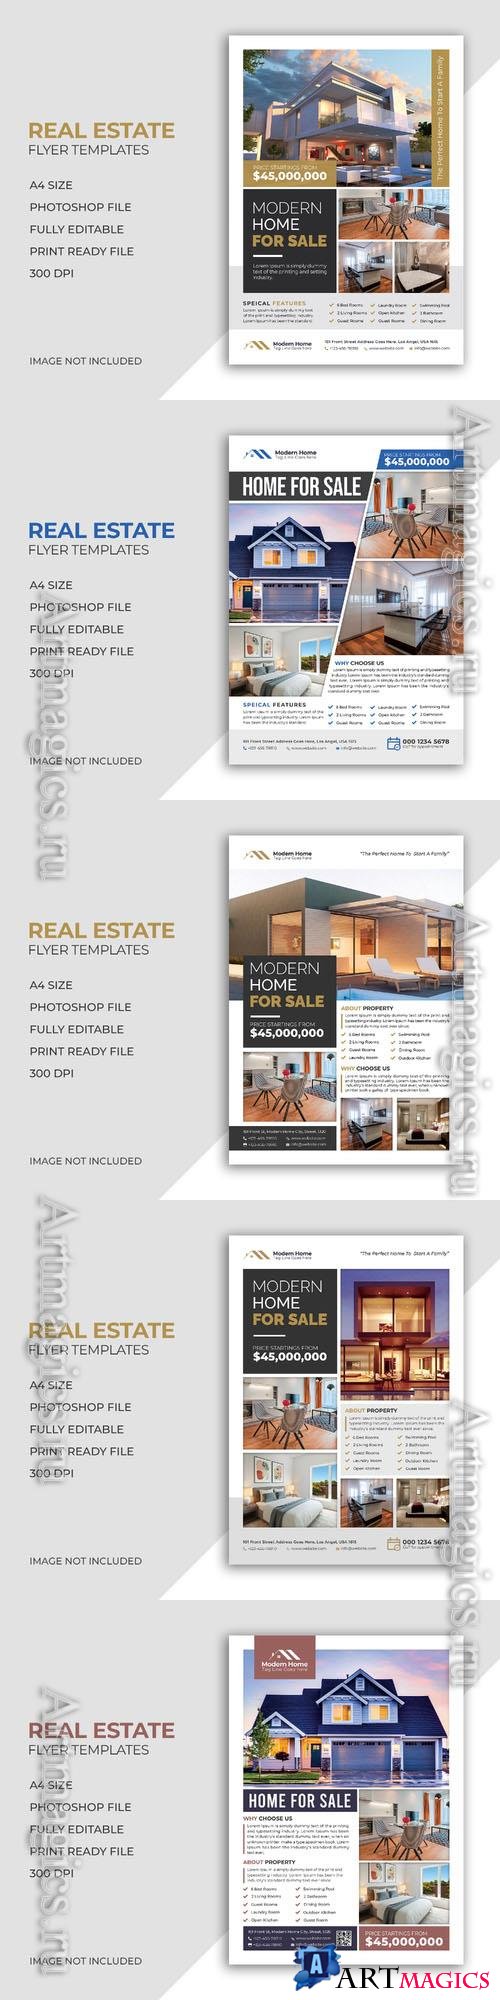 Real estate psd flyer design template